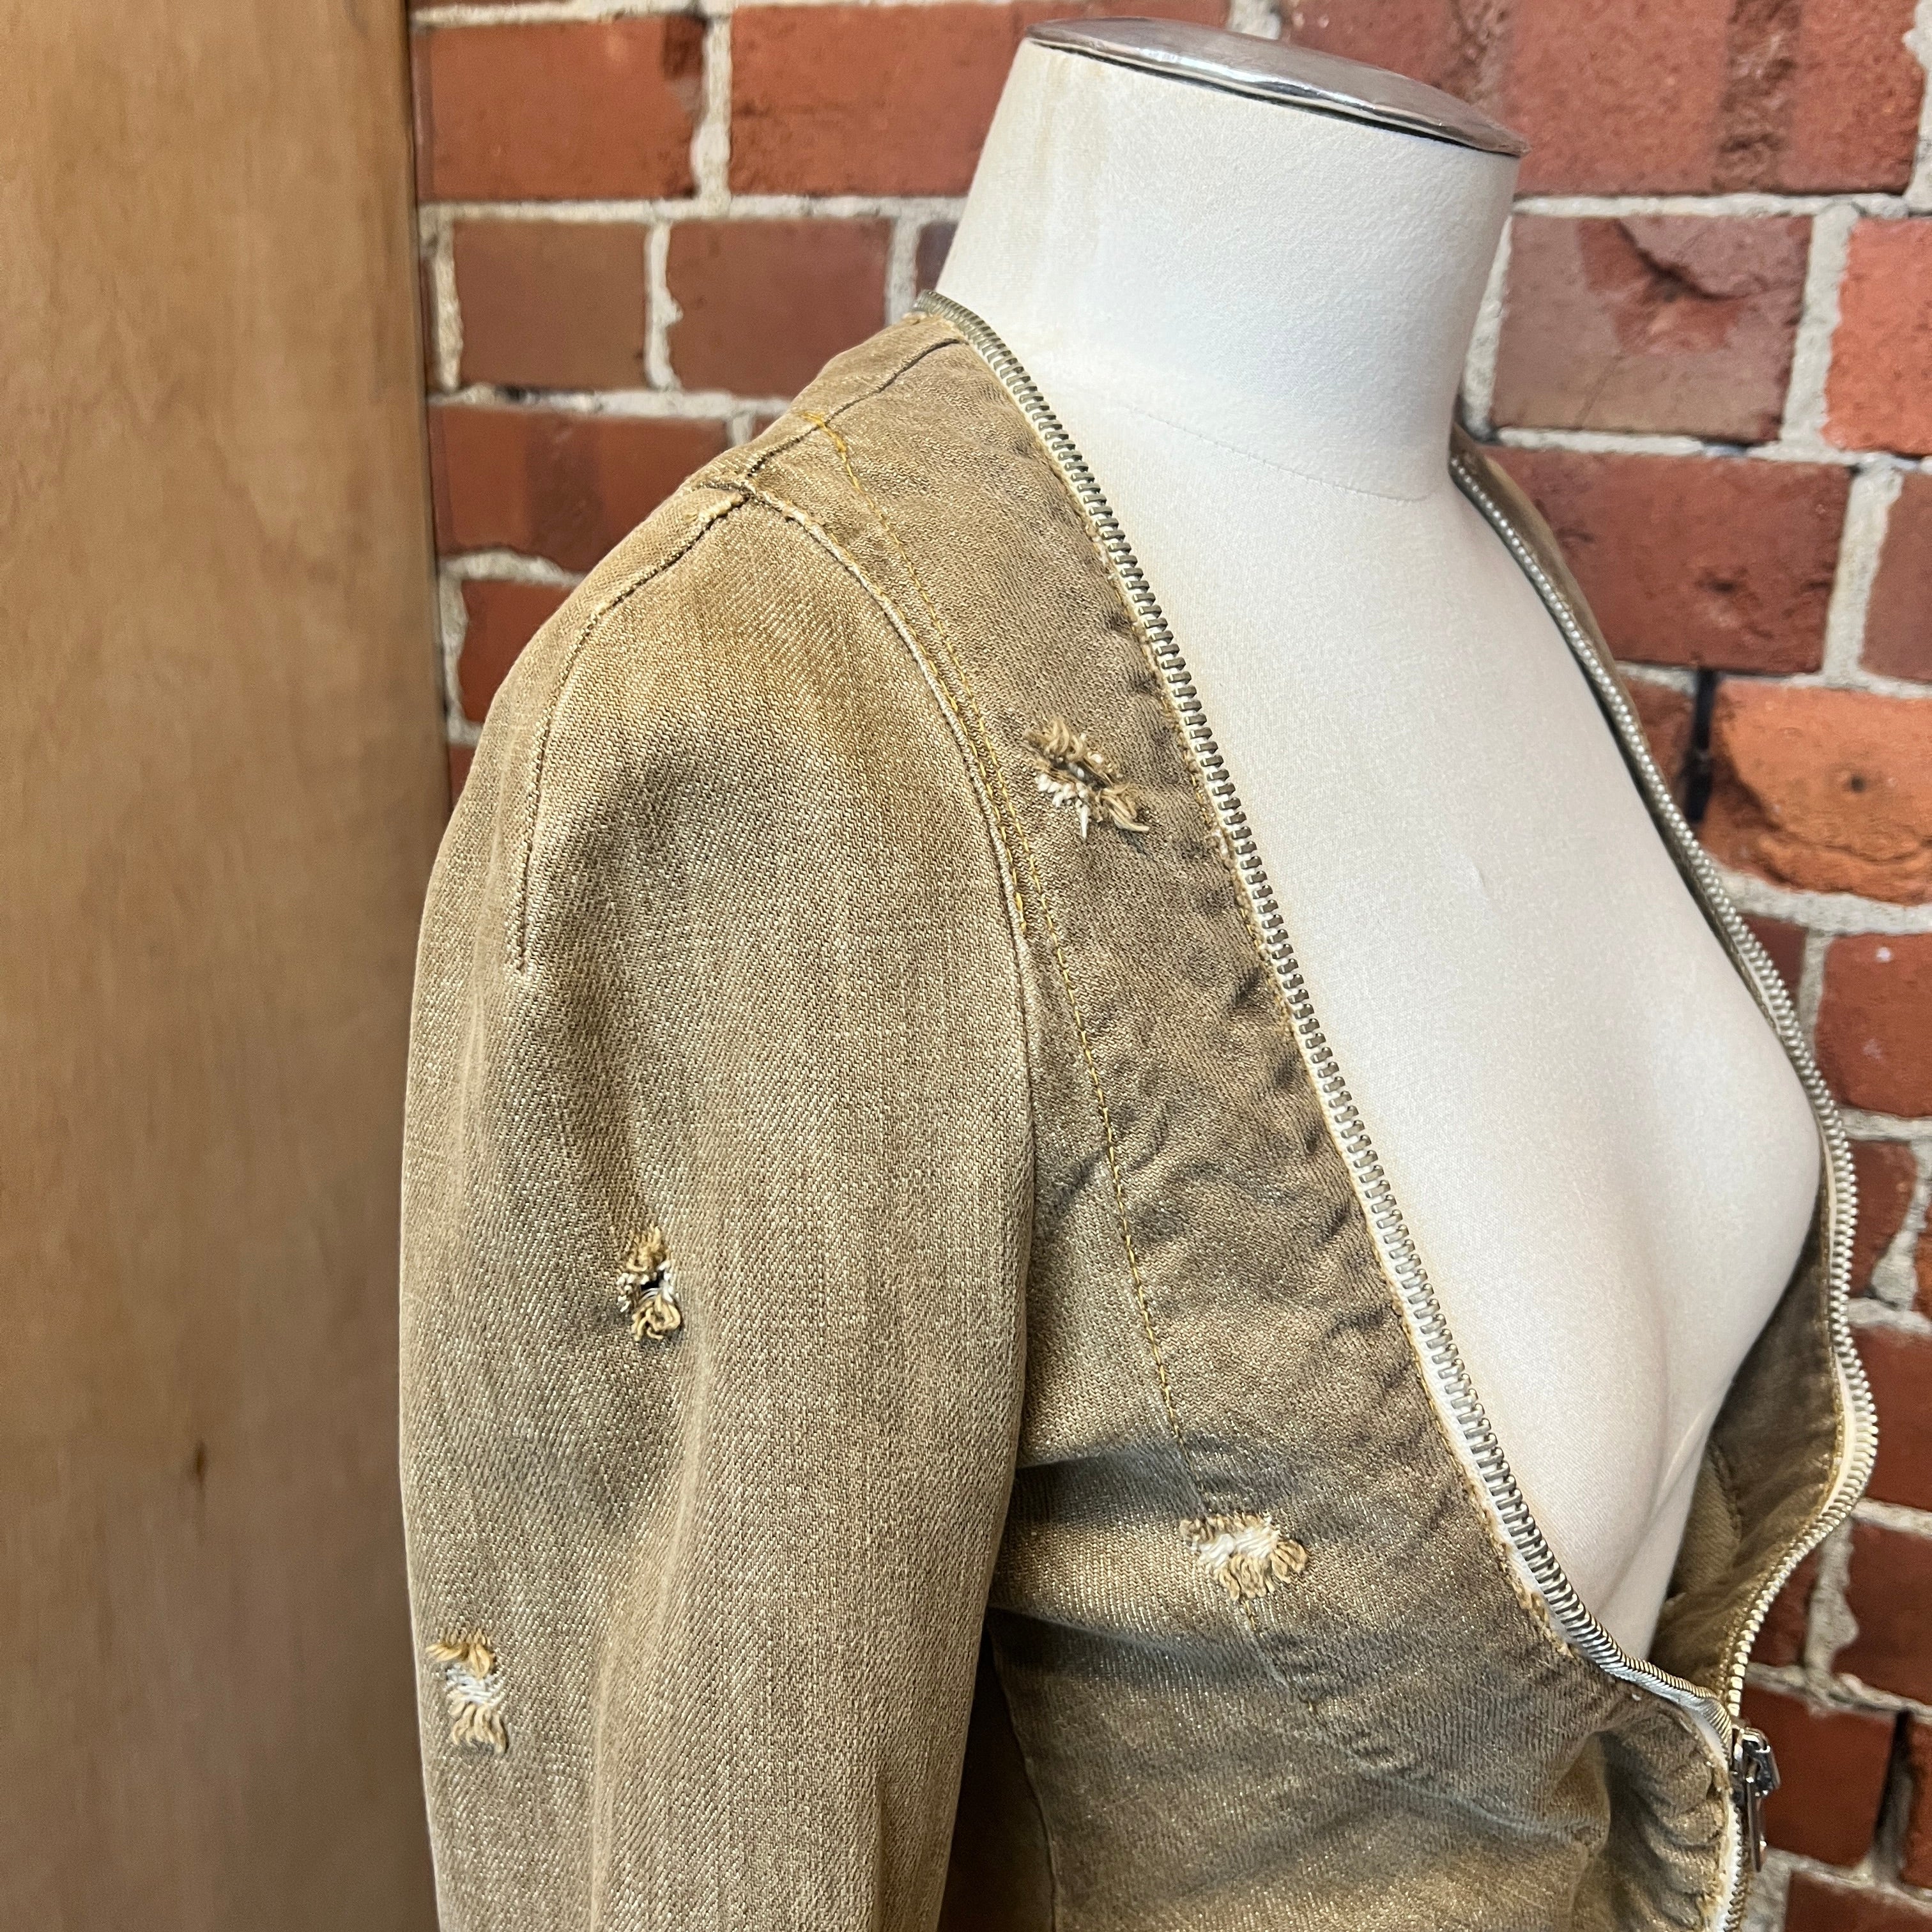 VIVIENNE WESTWOOD 1990's distressed corset jacket